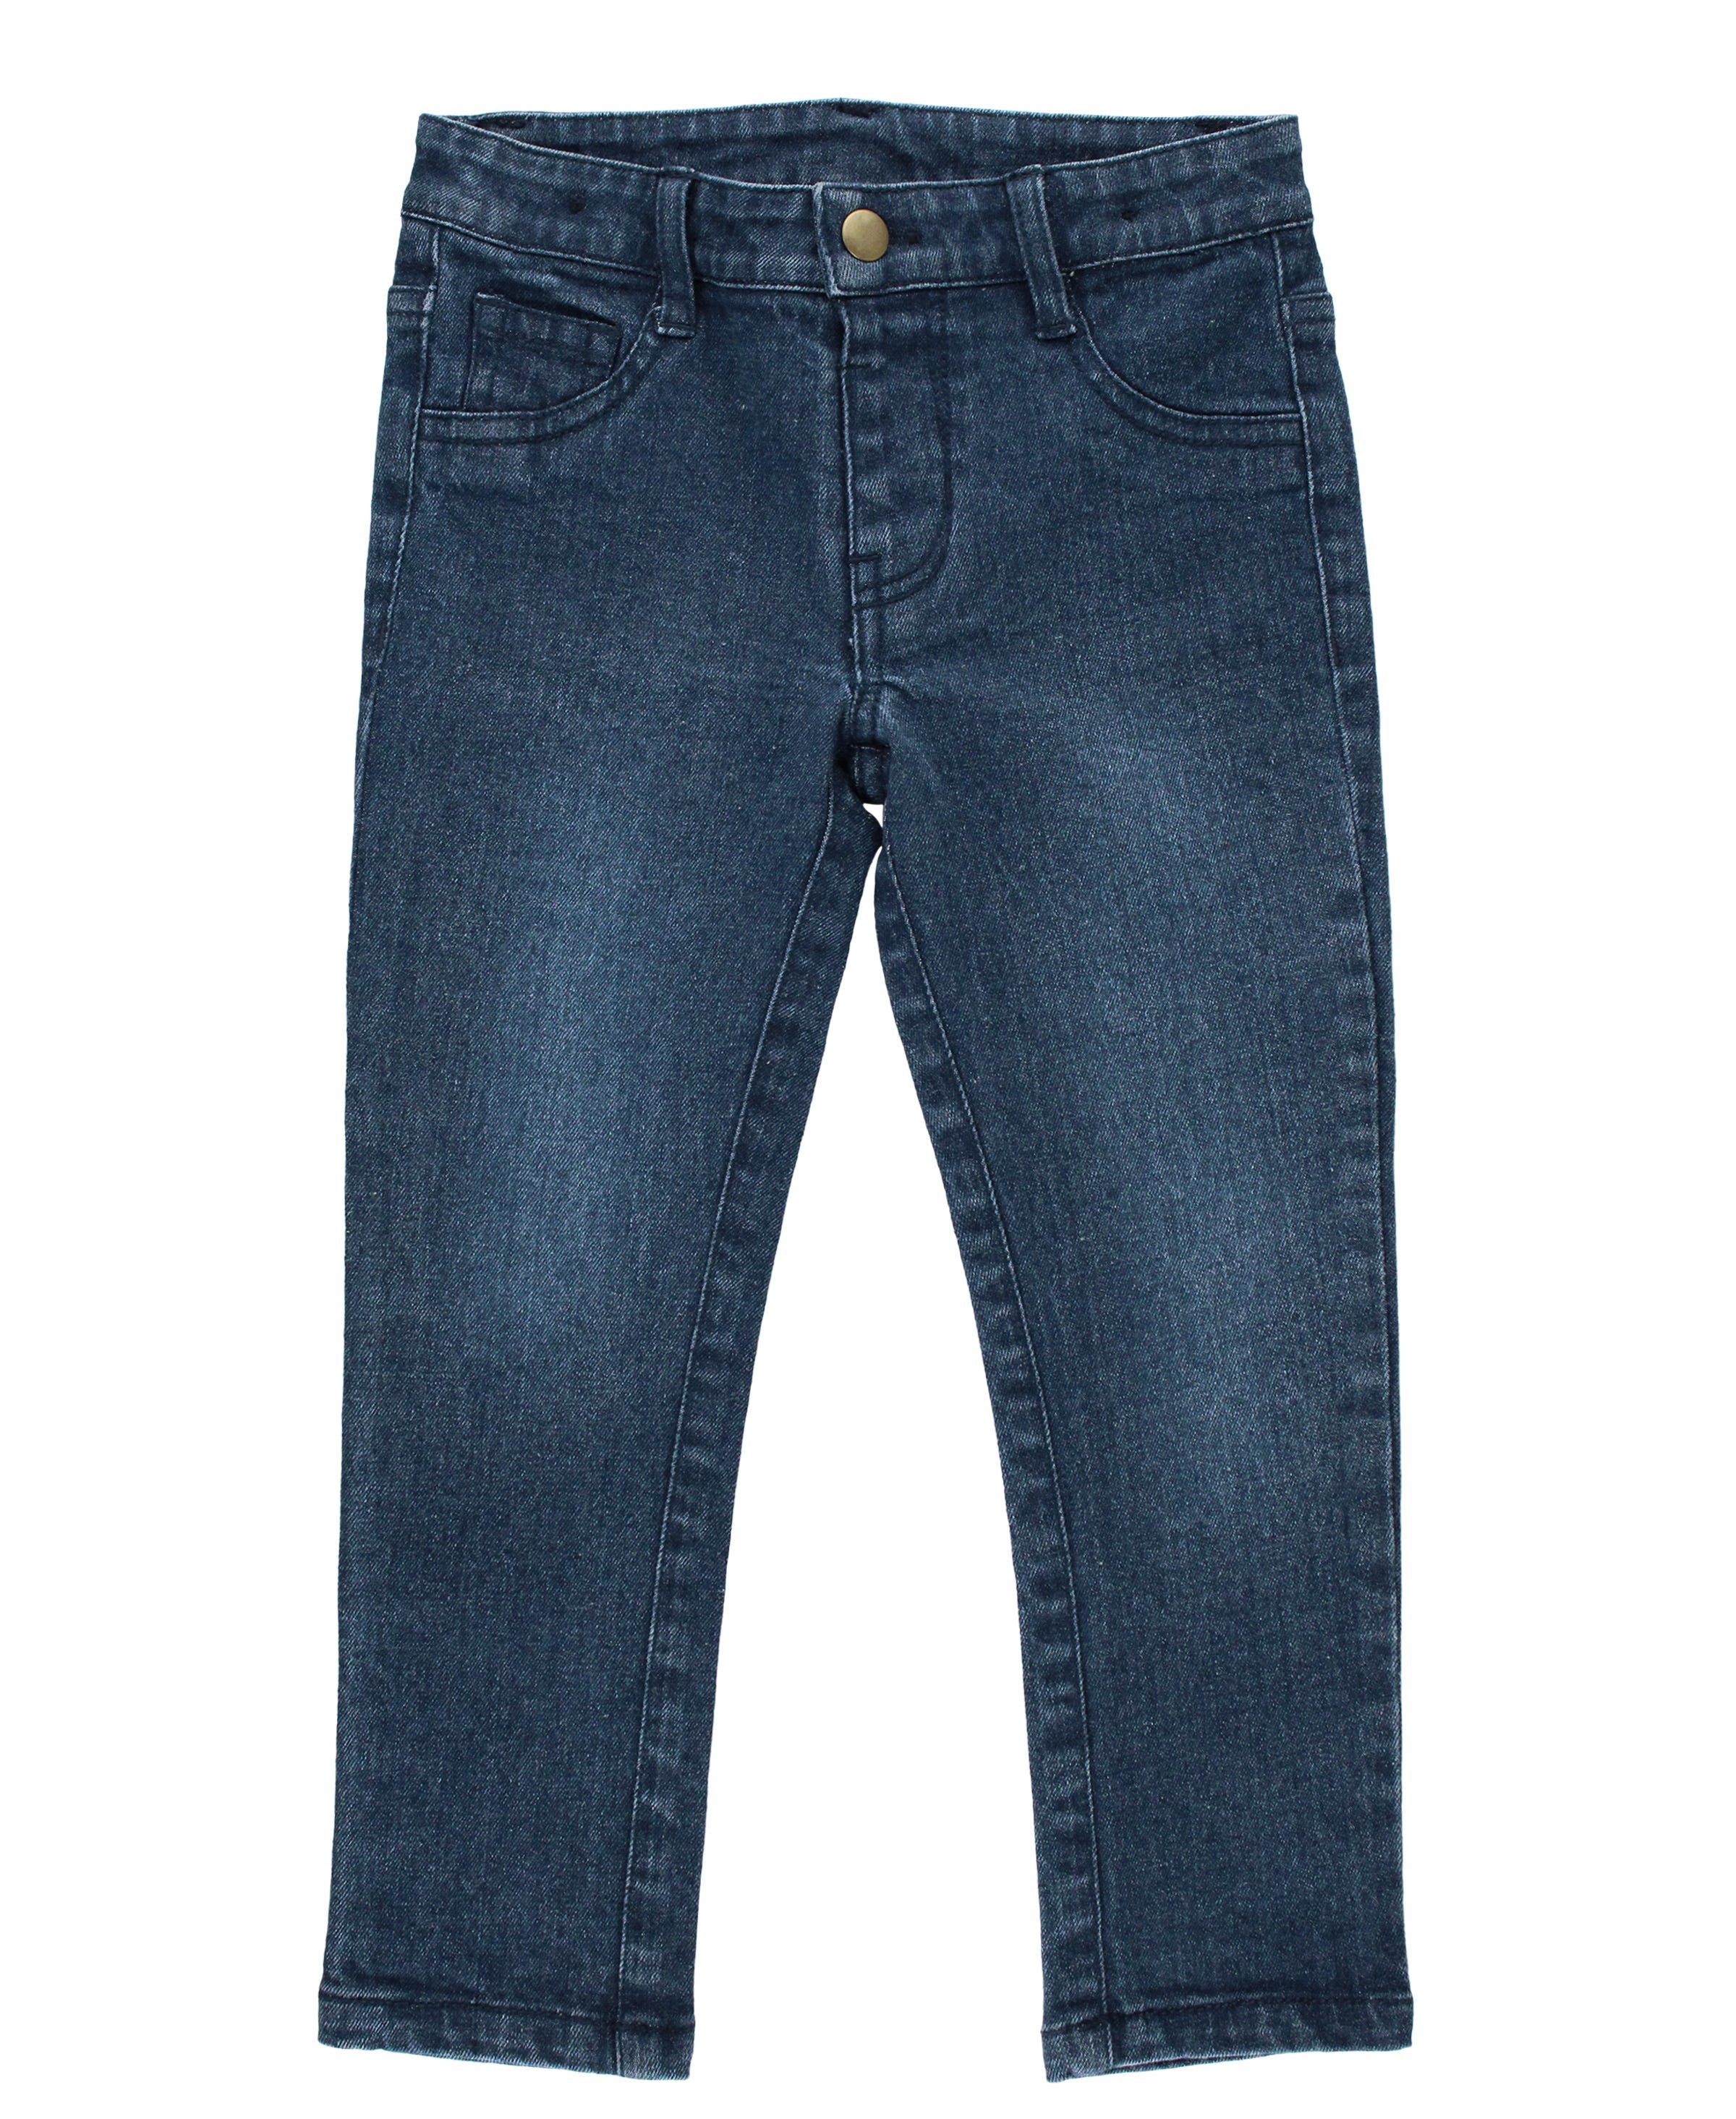 Ruffle Butts Medium Wash Skinny Jeans (Final Sale)